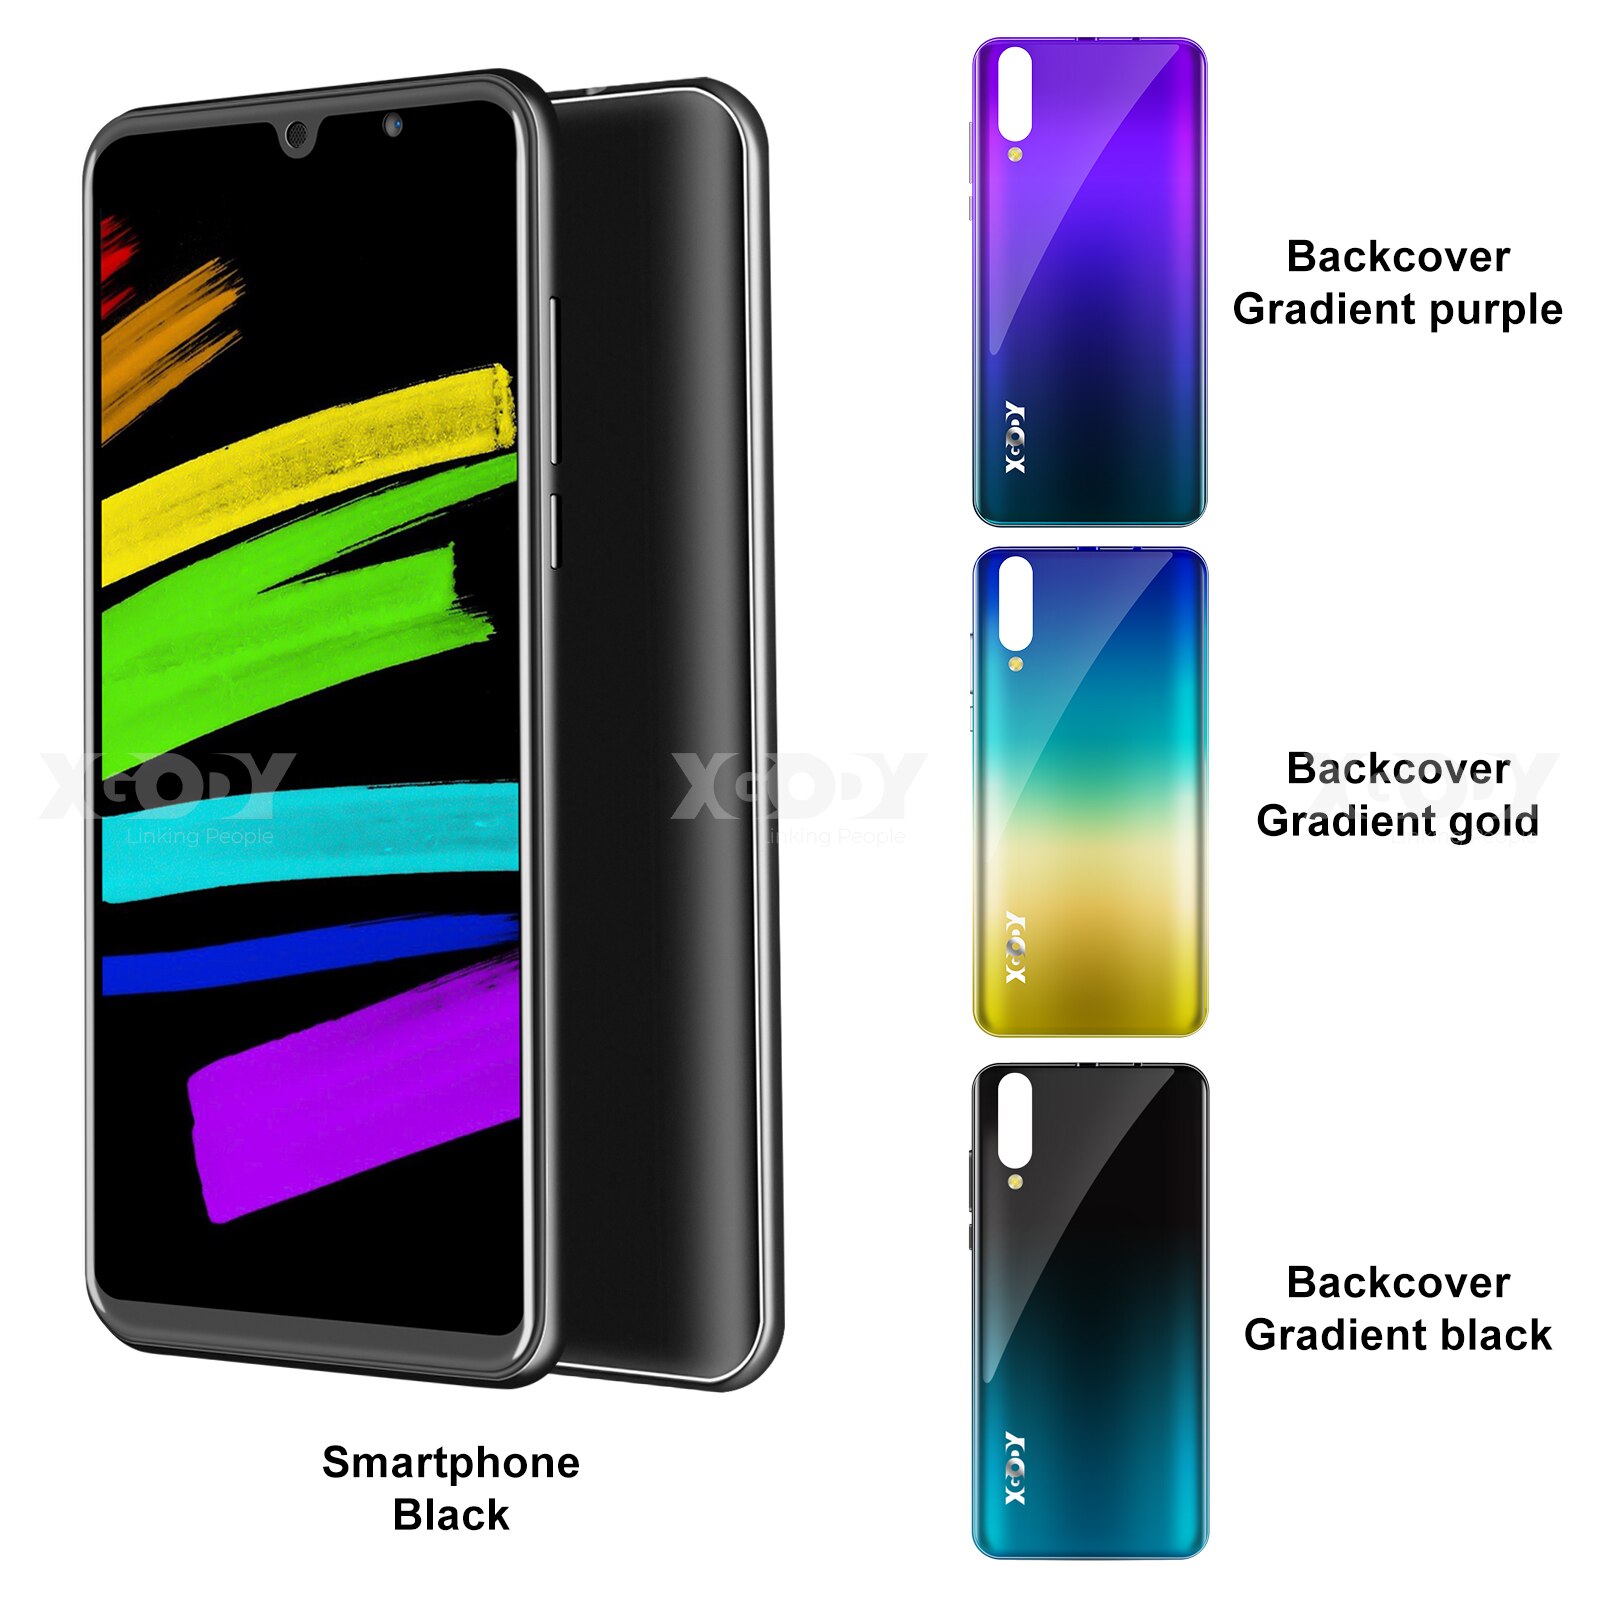 XGODY P30 3G Smartphone 6" 18:9 Android 9.0 2GB RAM 16GB ROM MTK6580 Quad Core Dual 2800mAh GPS WiFi 5MP Mobile Phone celular